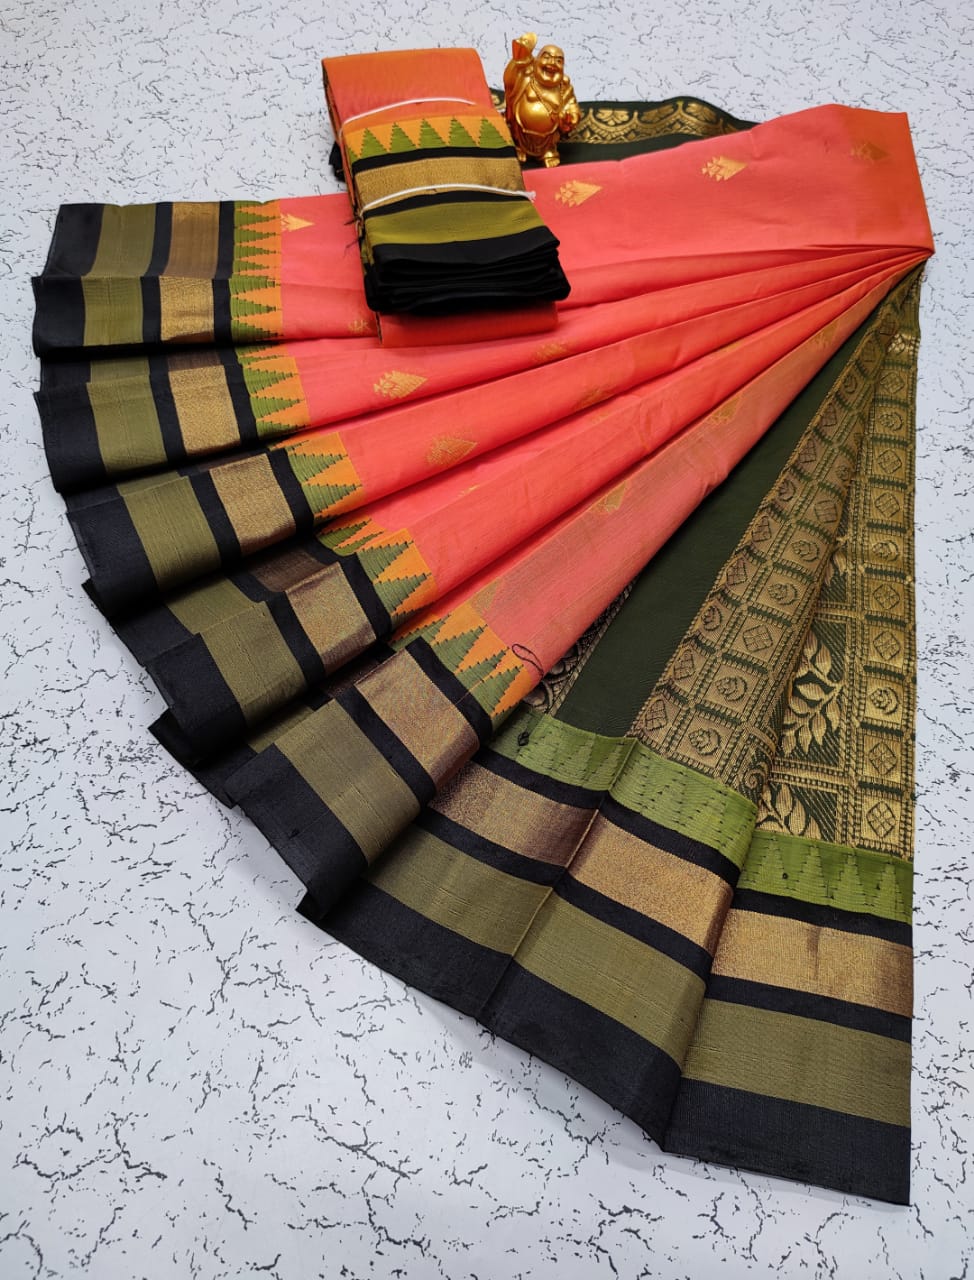 Kottanchi Silk Cotton Sarees  Wecomart - Buy Authentic Indian